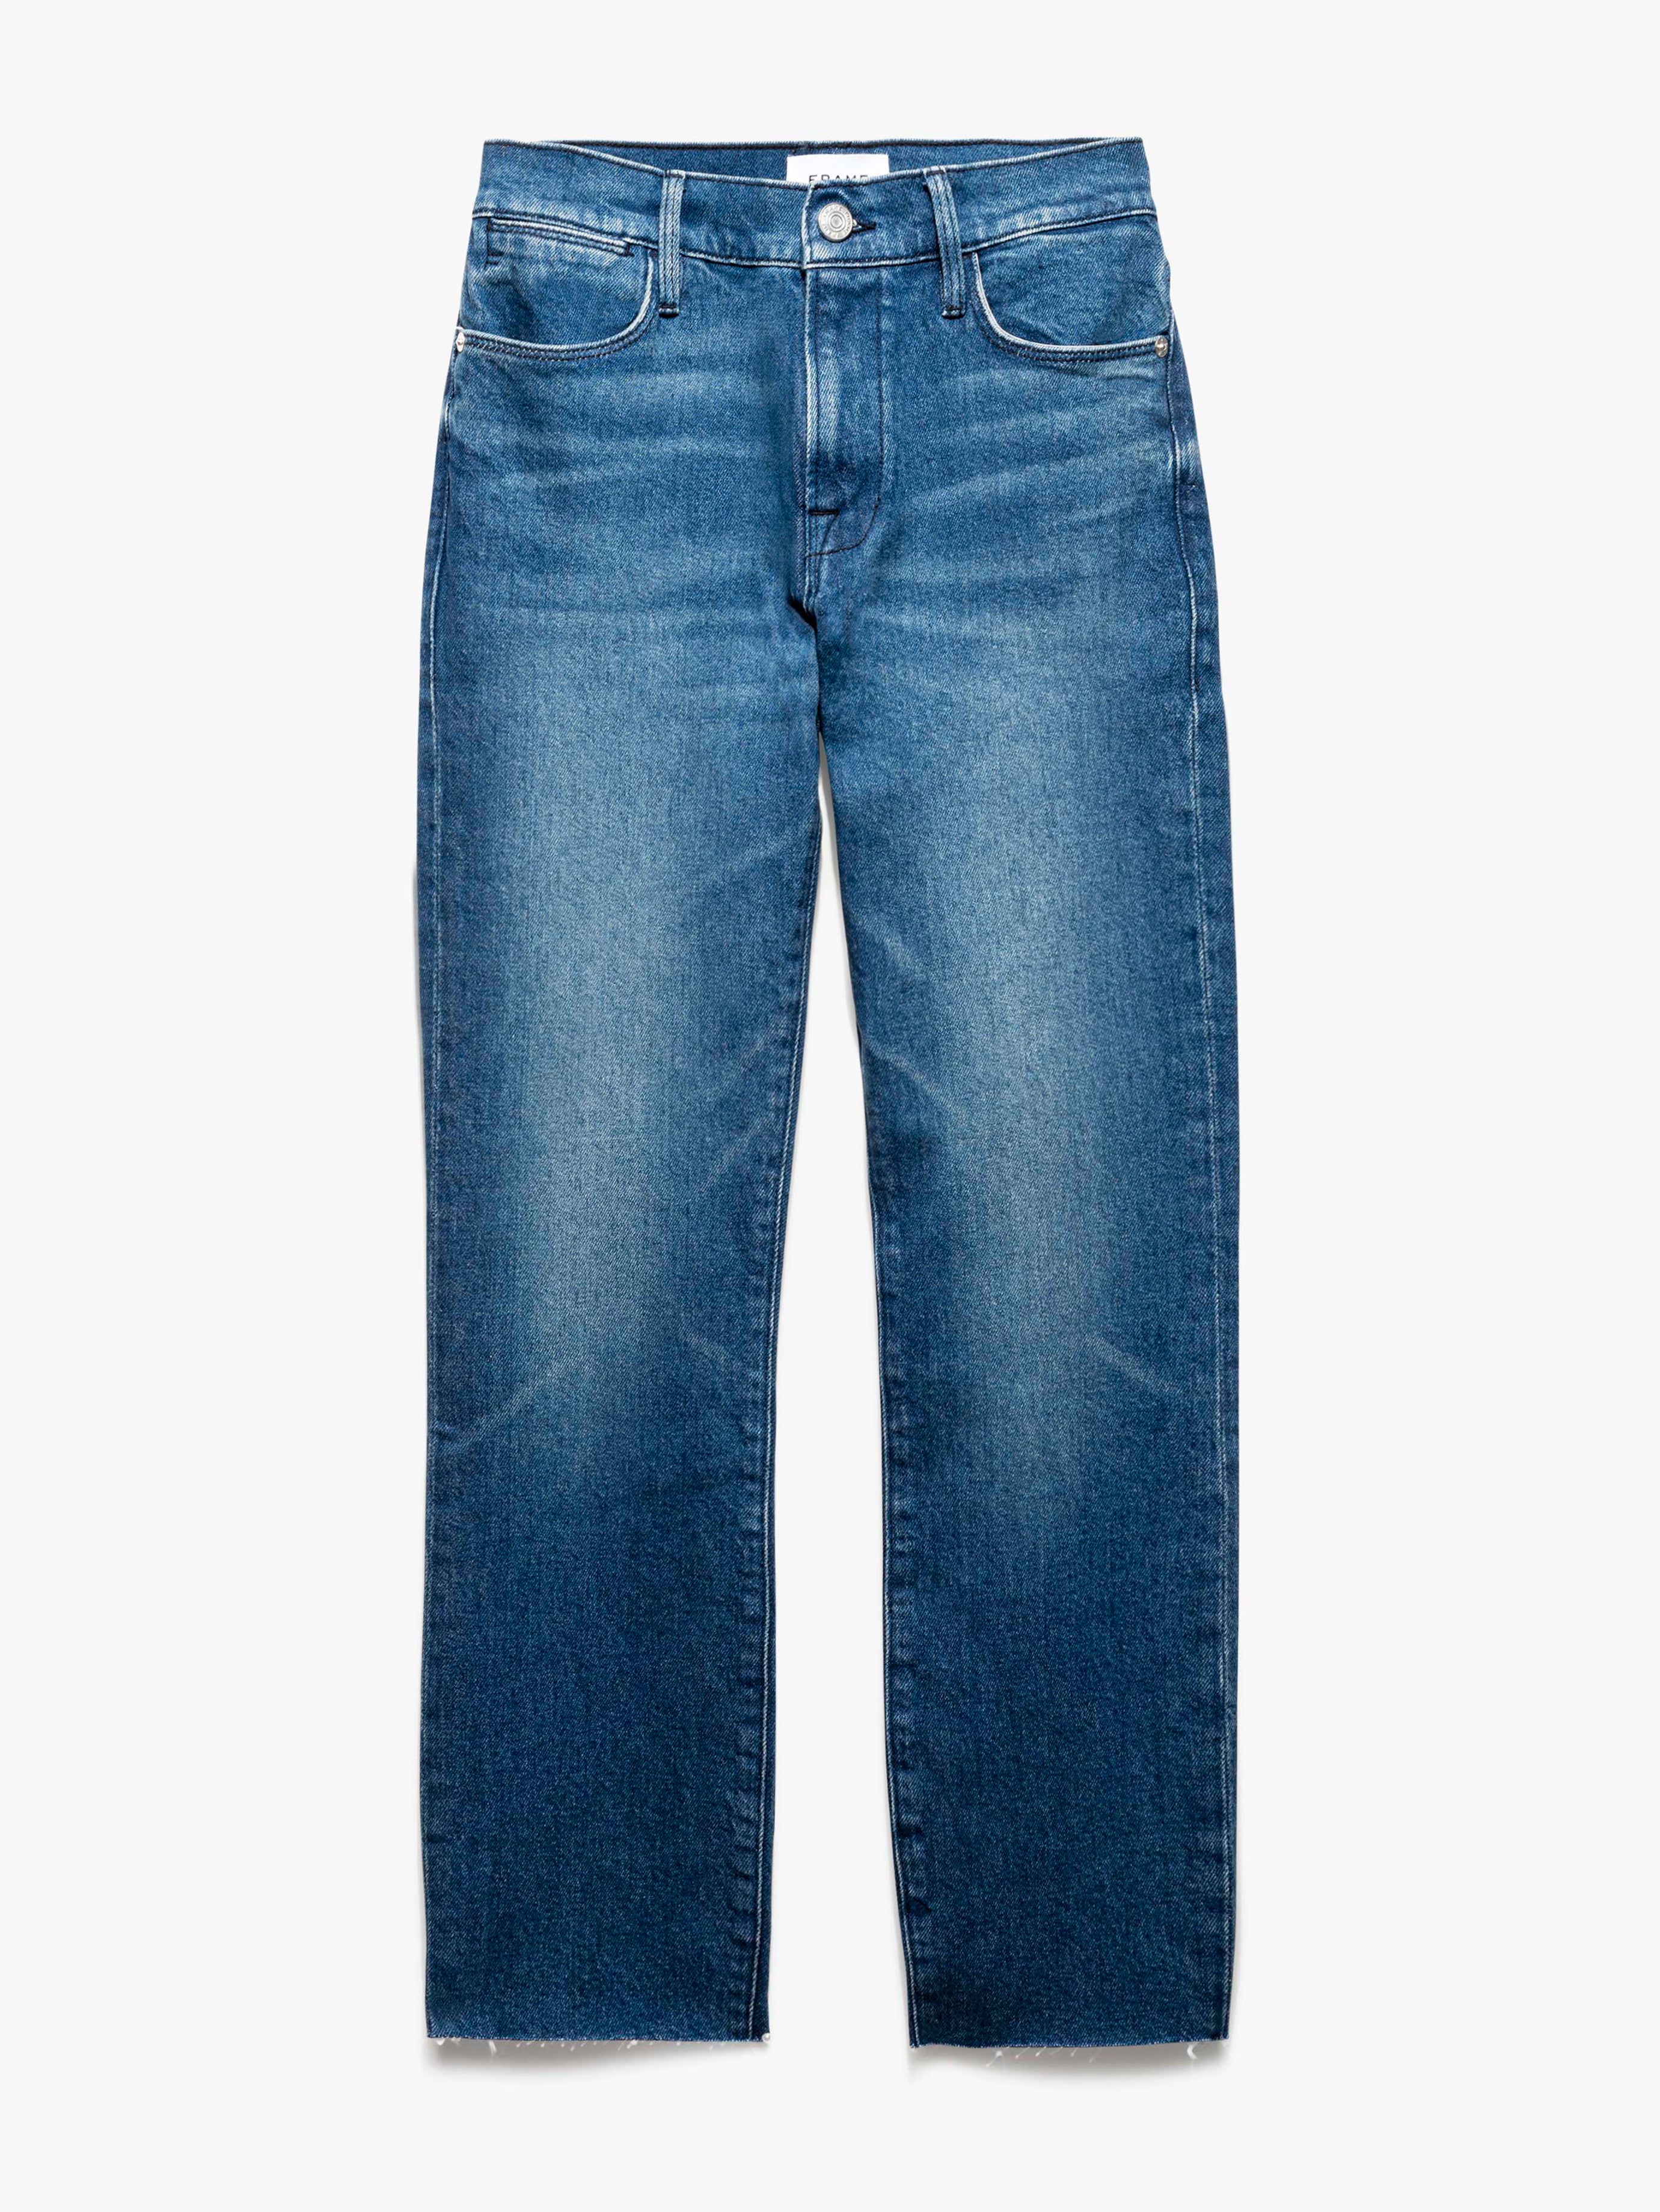 Honest Review of Frame LeOne Jeans - StyleDahlia